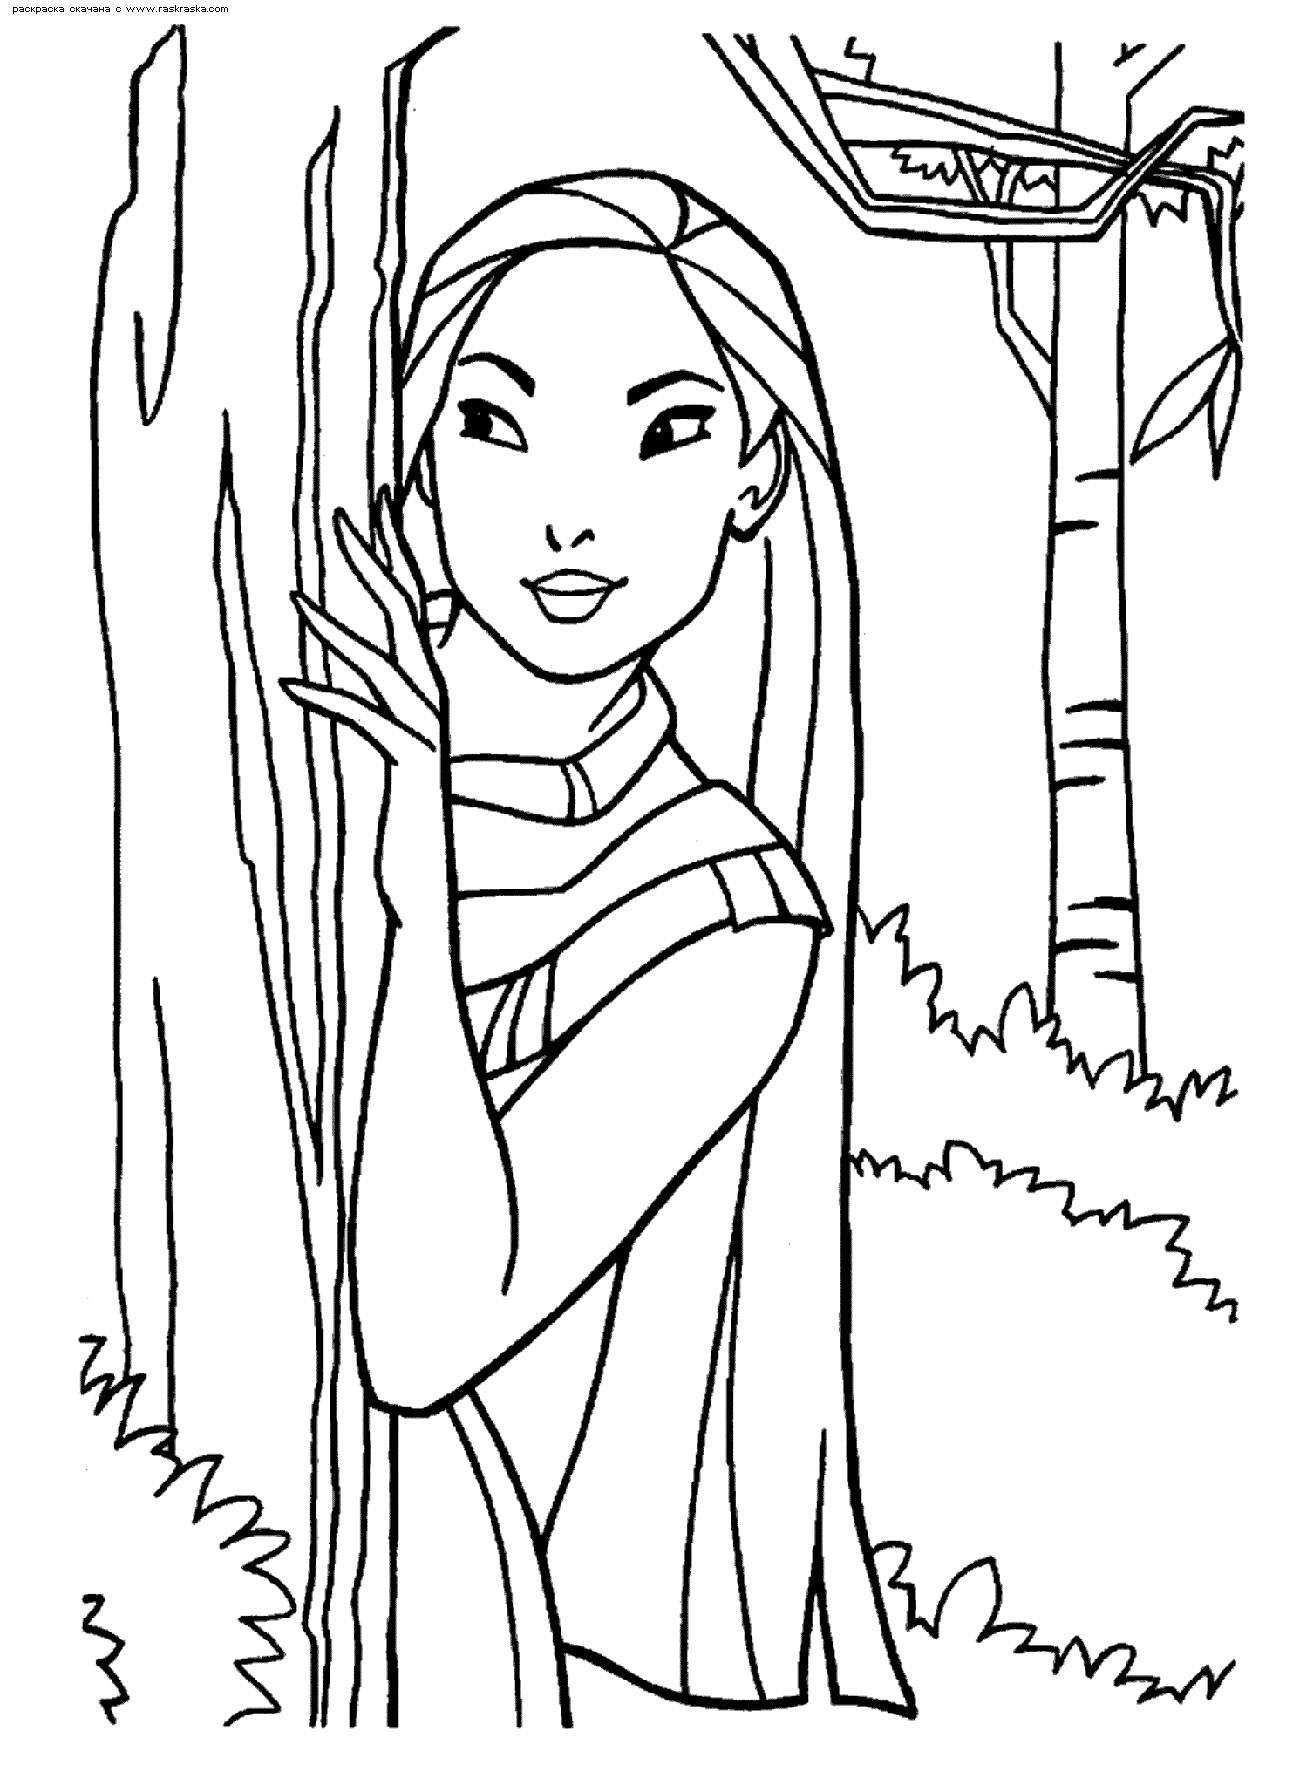 Pocahontas behind the tree